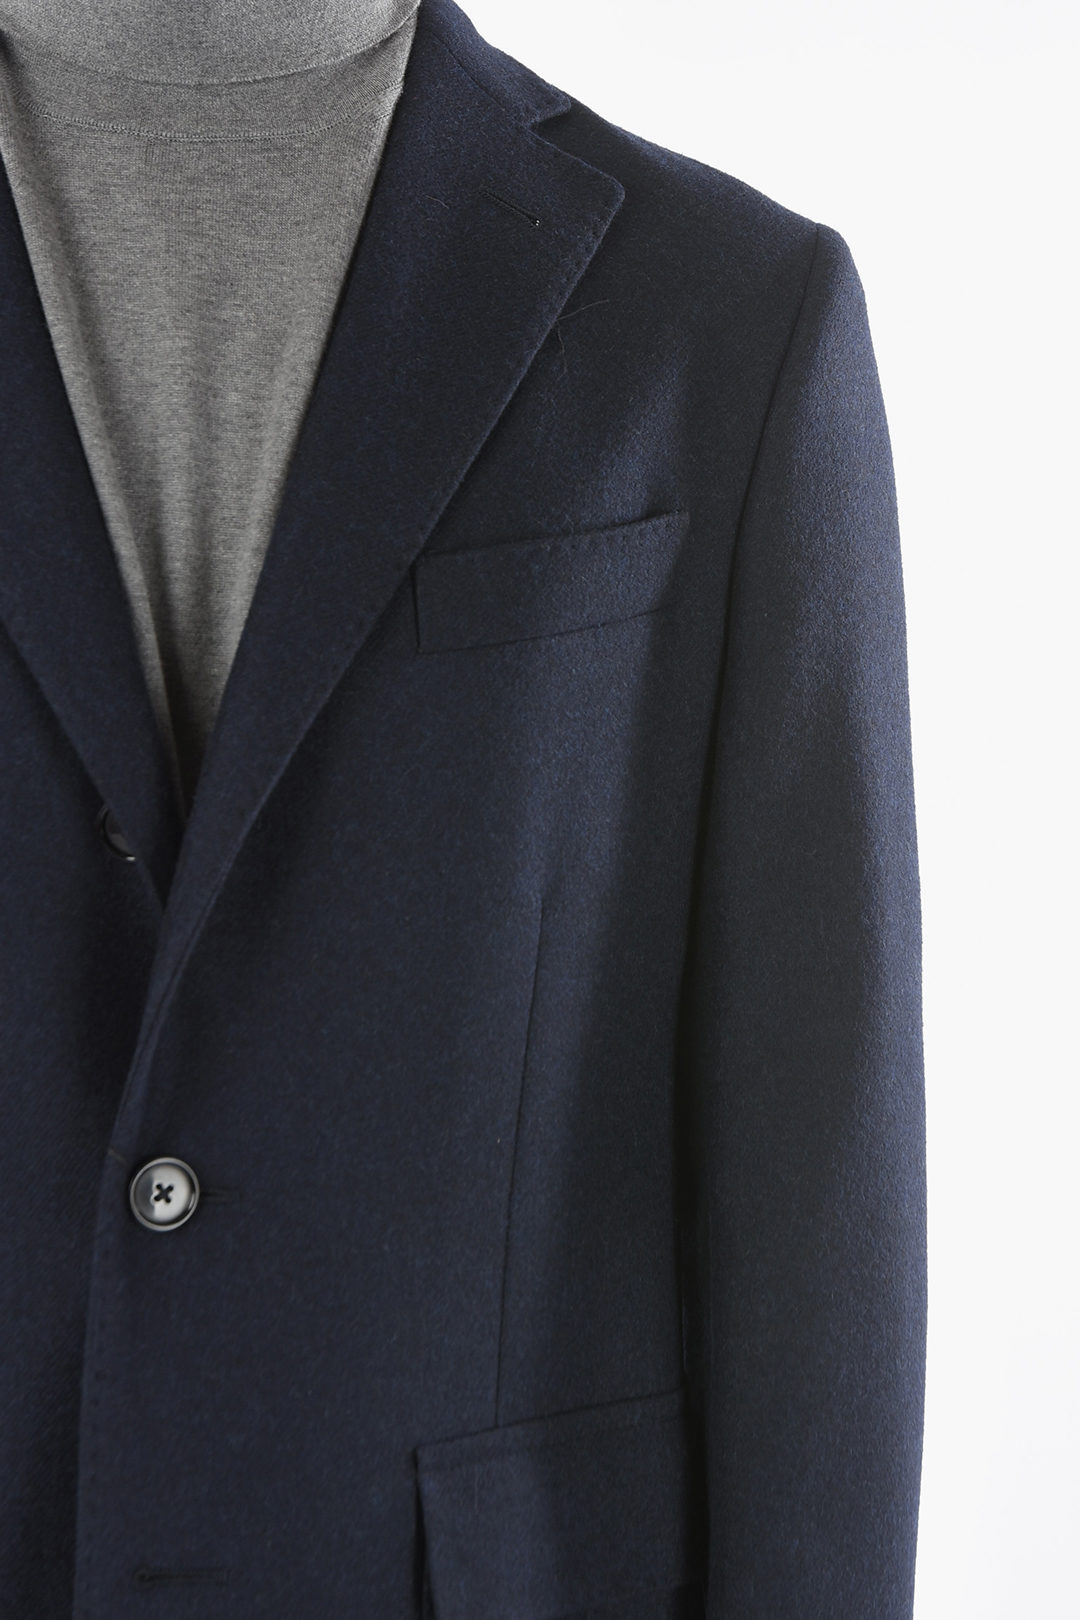 Corneliani Half-Lined Coat with Back Vent and Flap Pocket men - Glamood ...